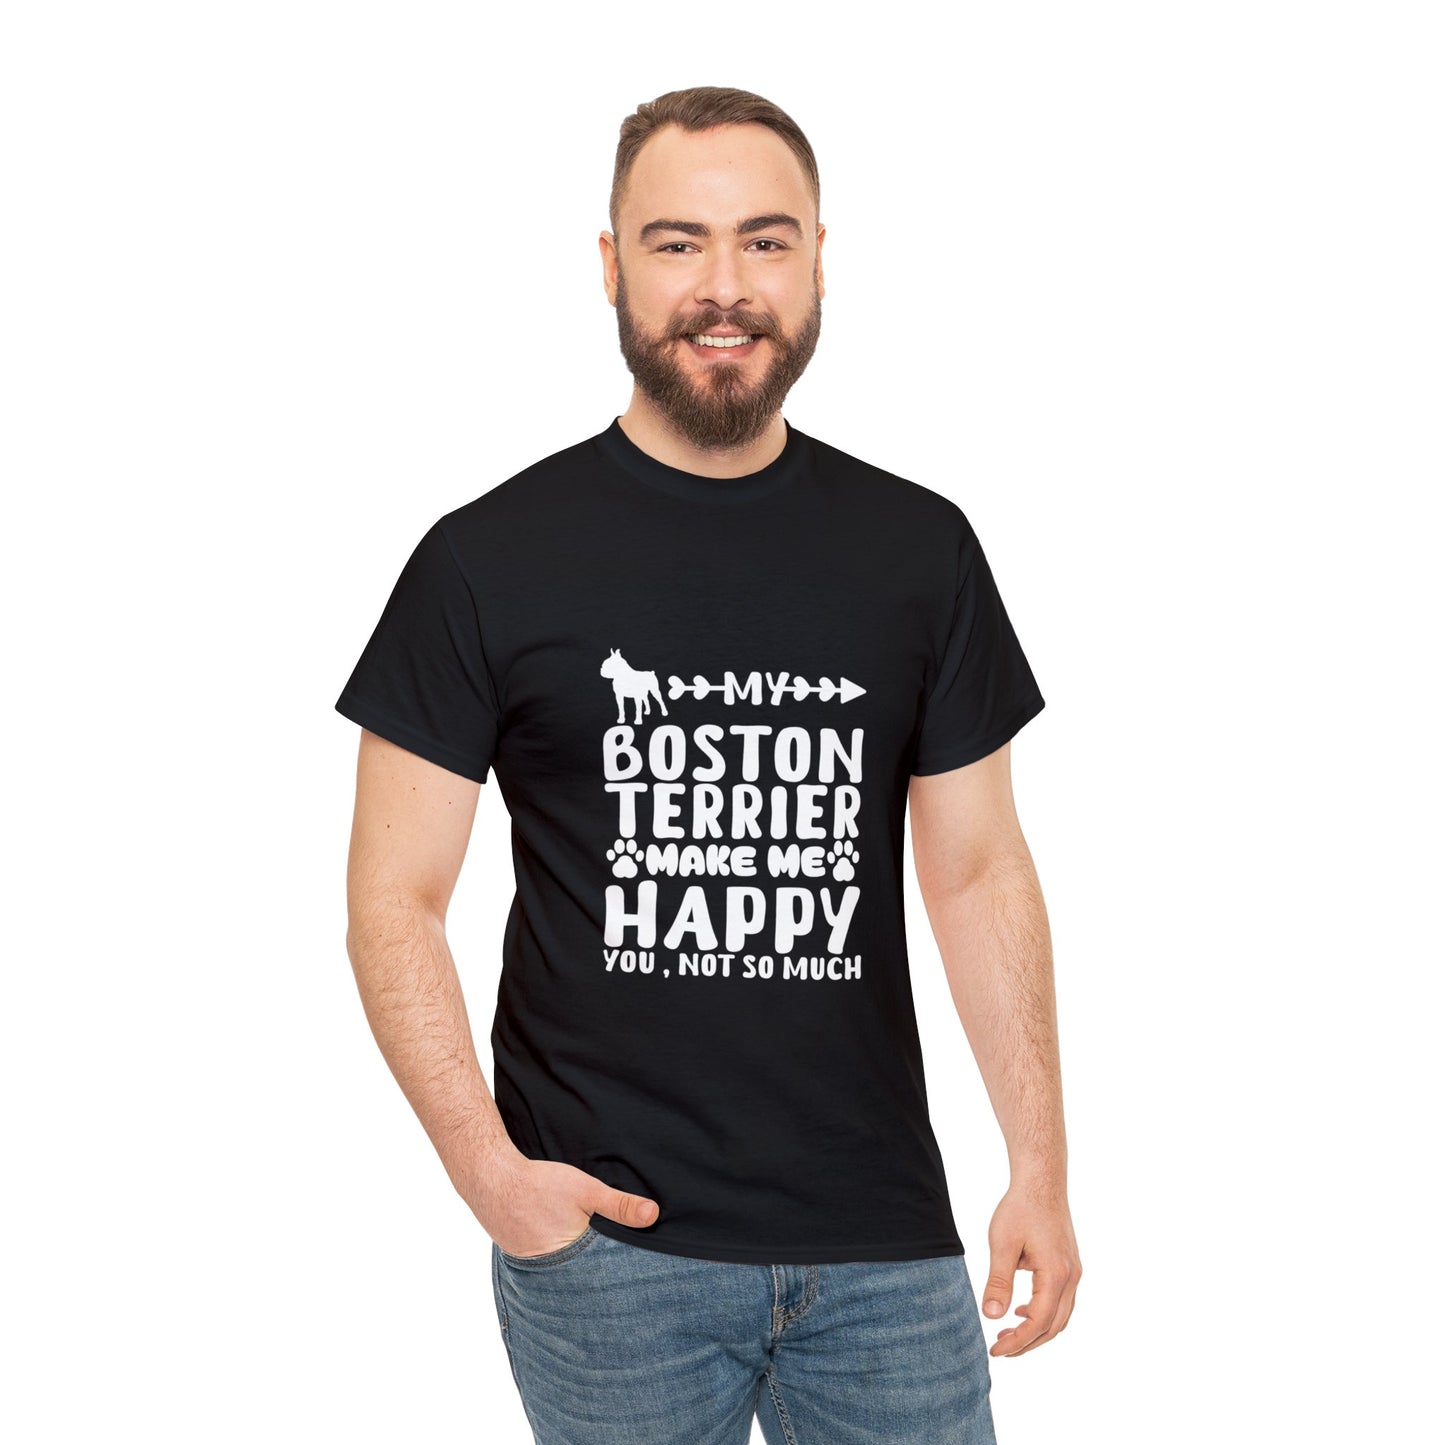 Camila - Unisex Tshirts for Boston Terrier Lovers